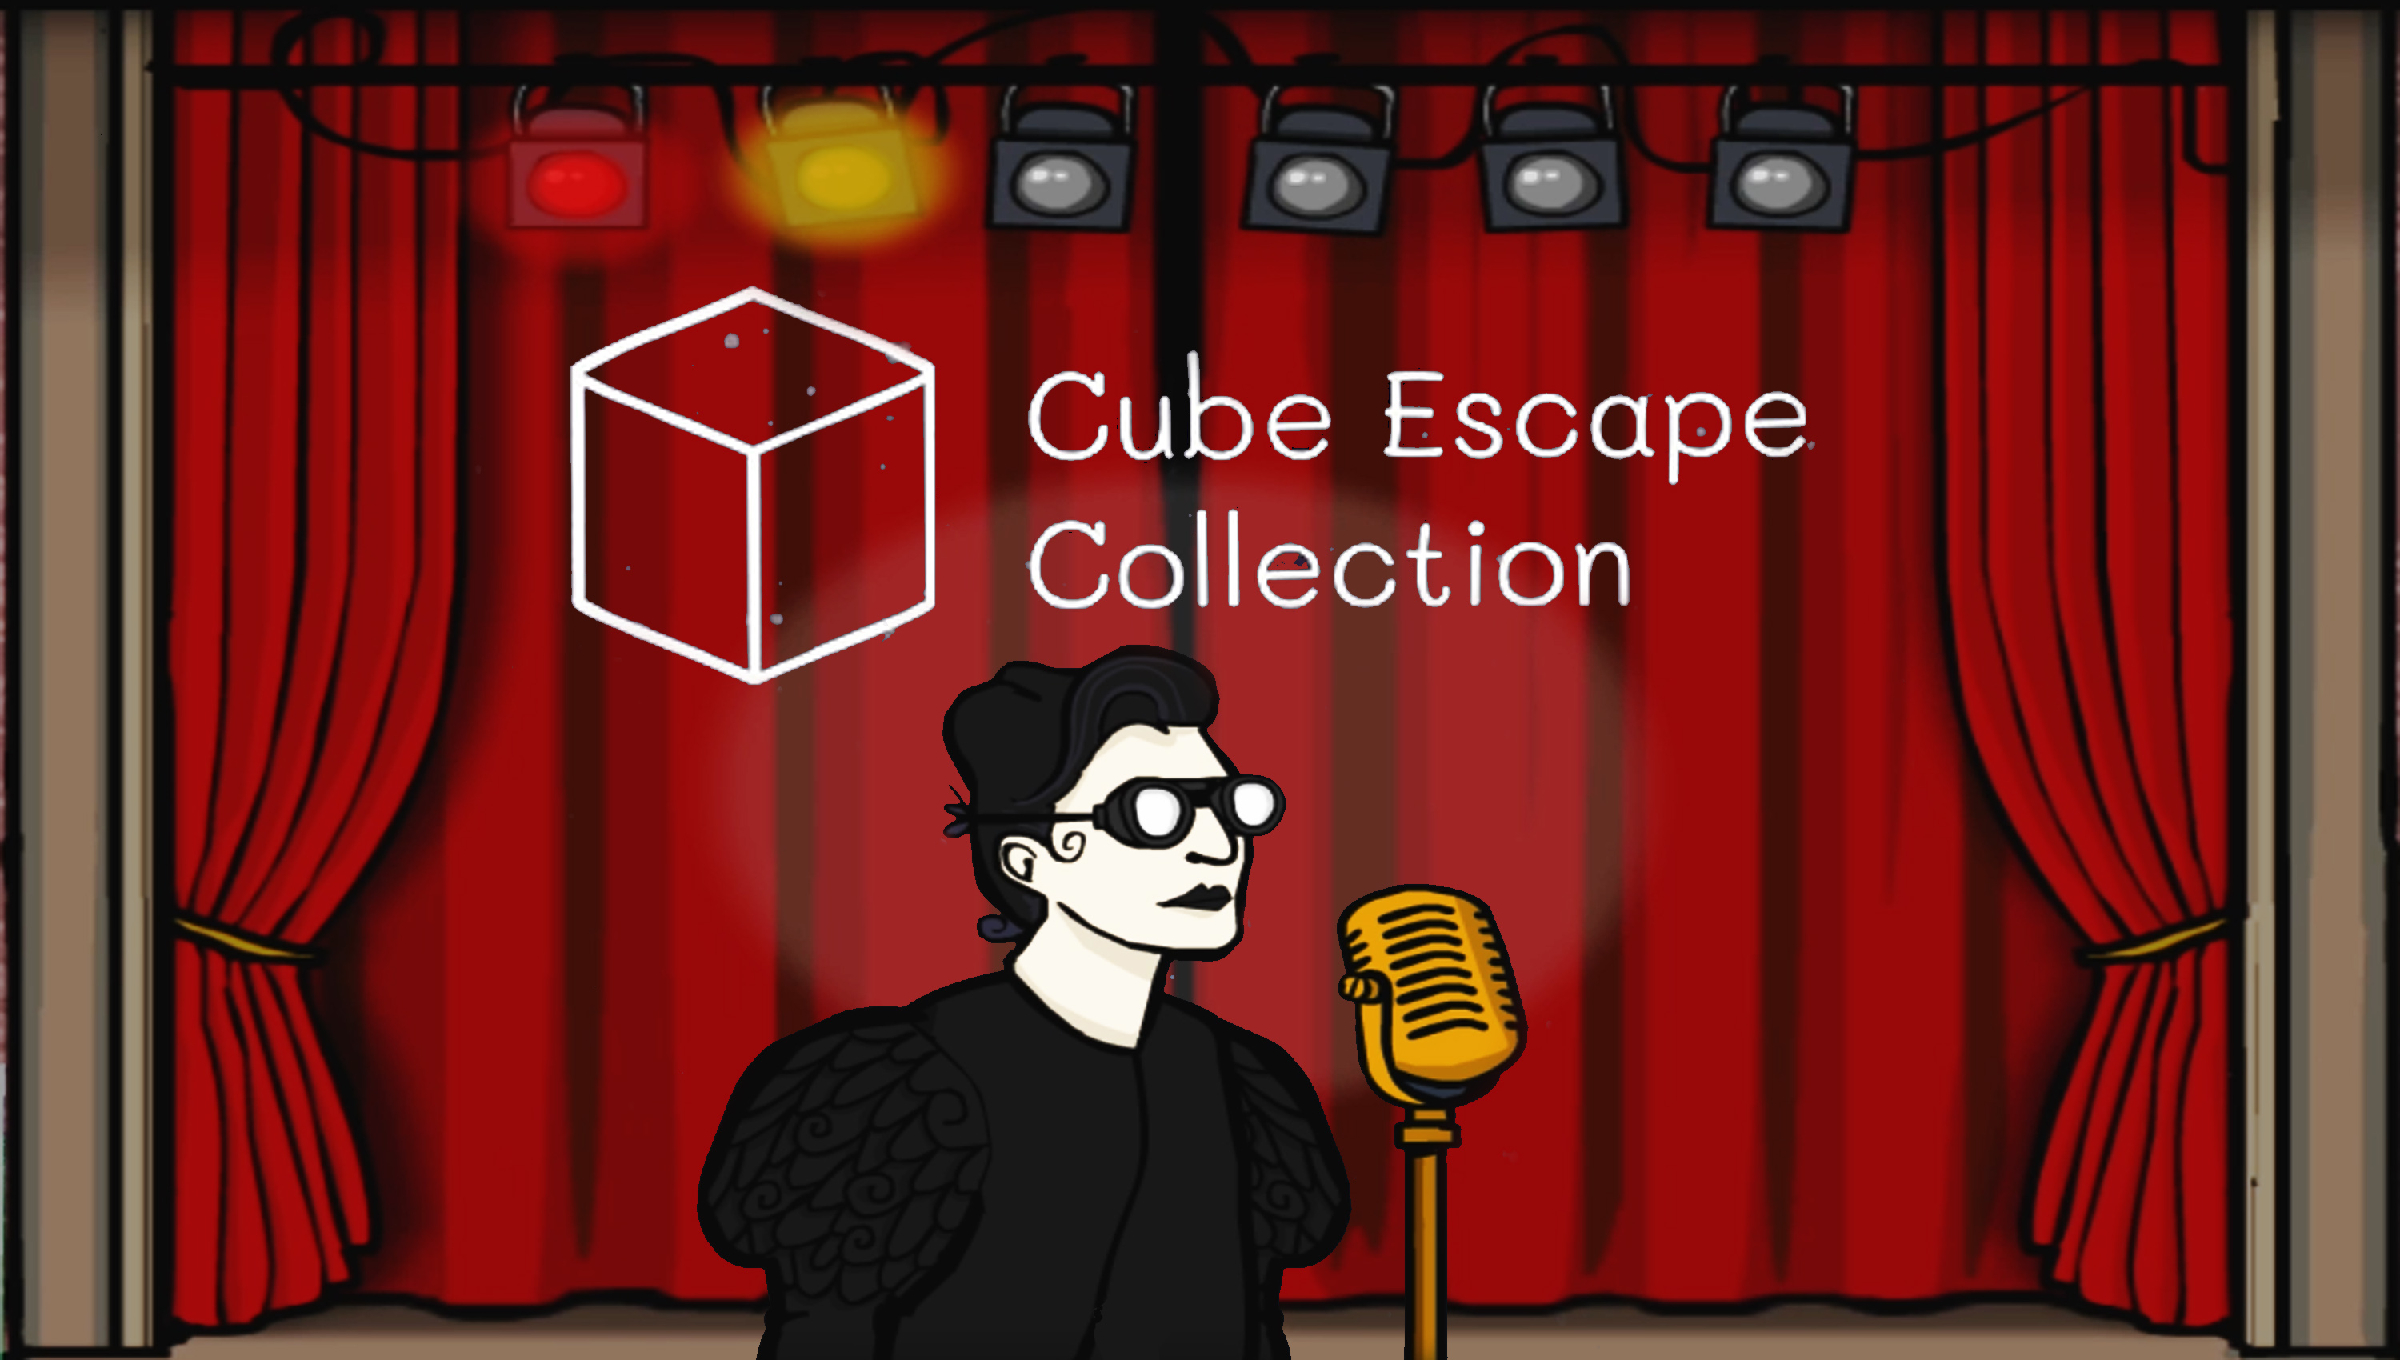 Куб эскейп театр. Cube Escape Theatre. Cube Escape collection Theatre. Куб Ескапе театр. Cube Escape Seasons Summer.